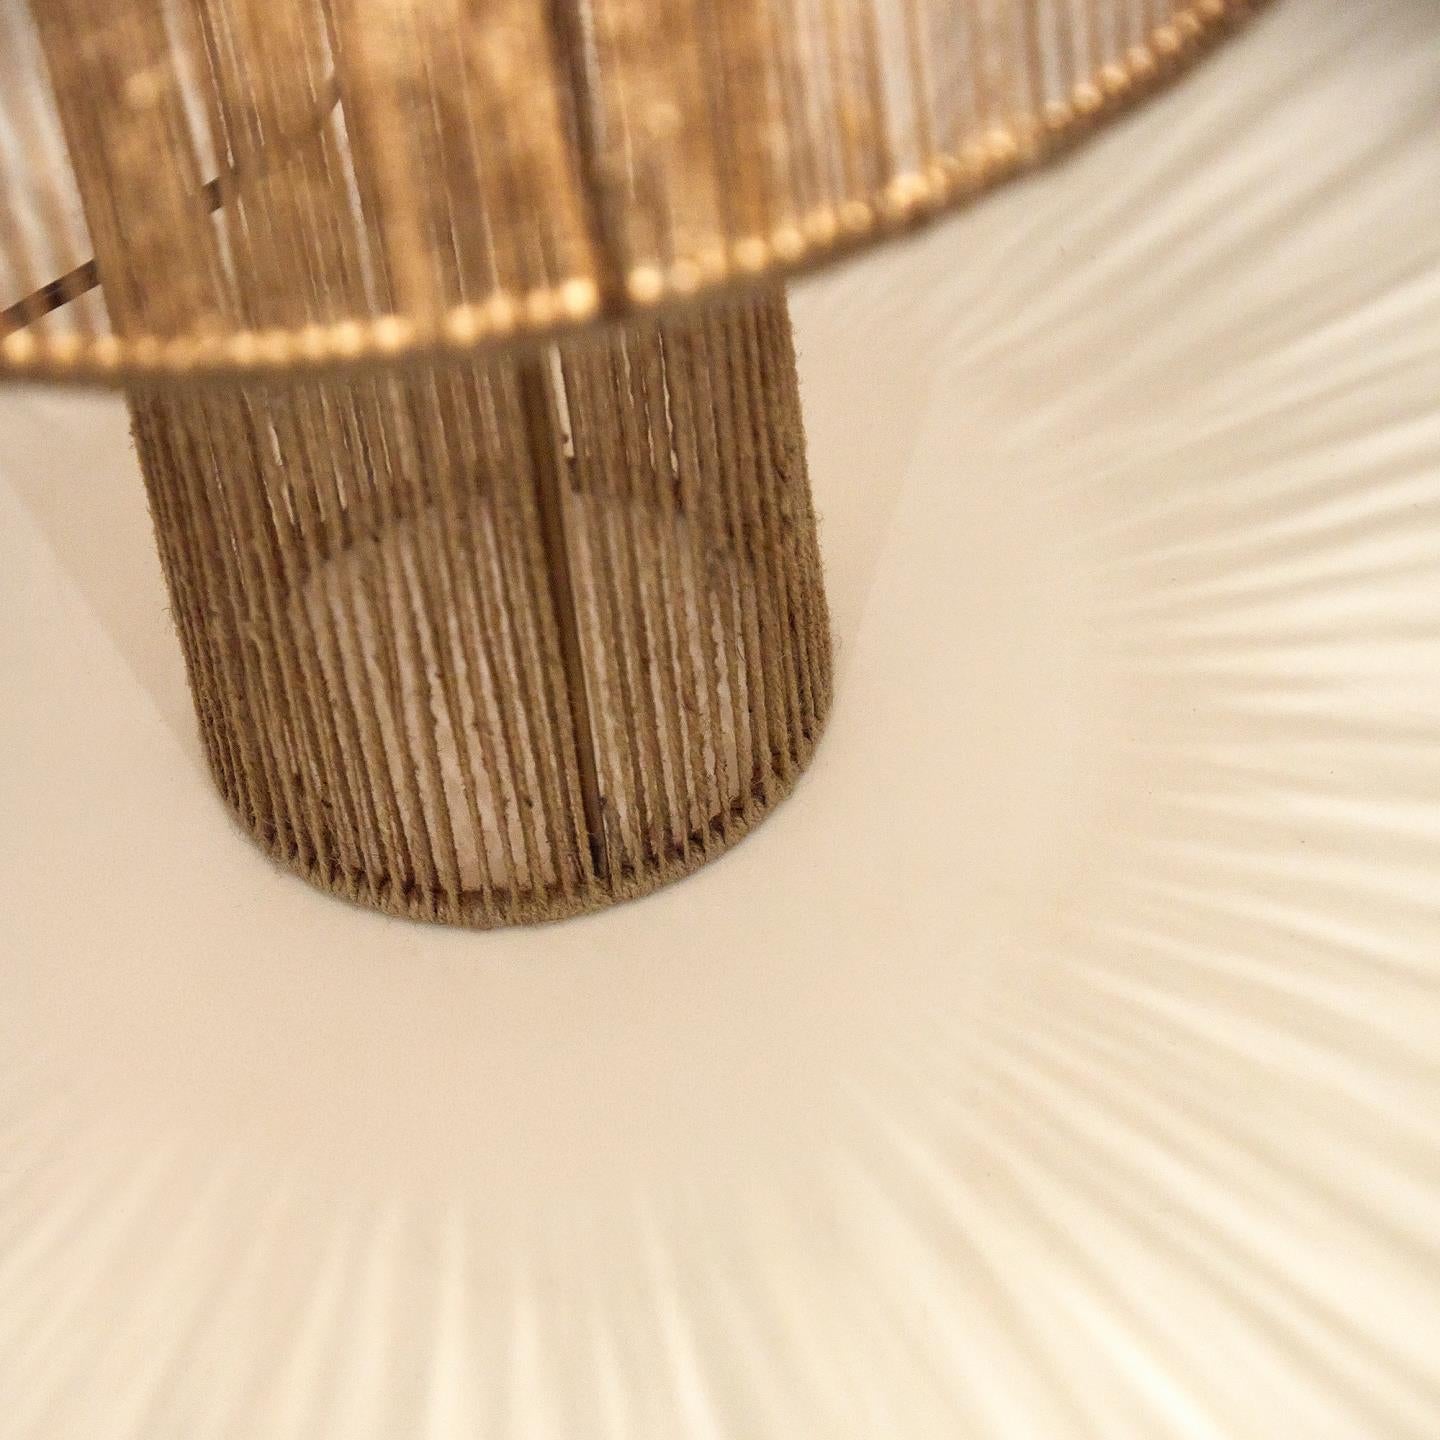 Lampa stołowa PONTOS naturalna juta La Forma    Eye on Design